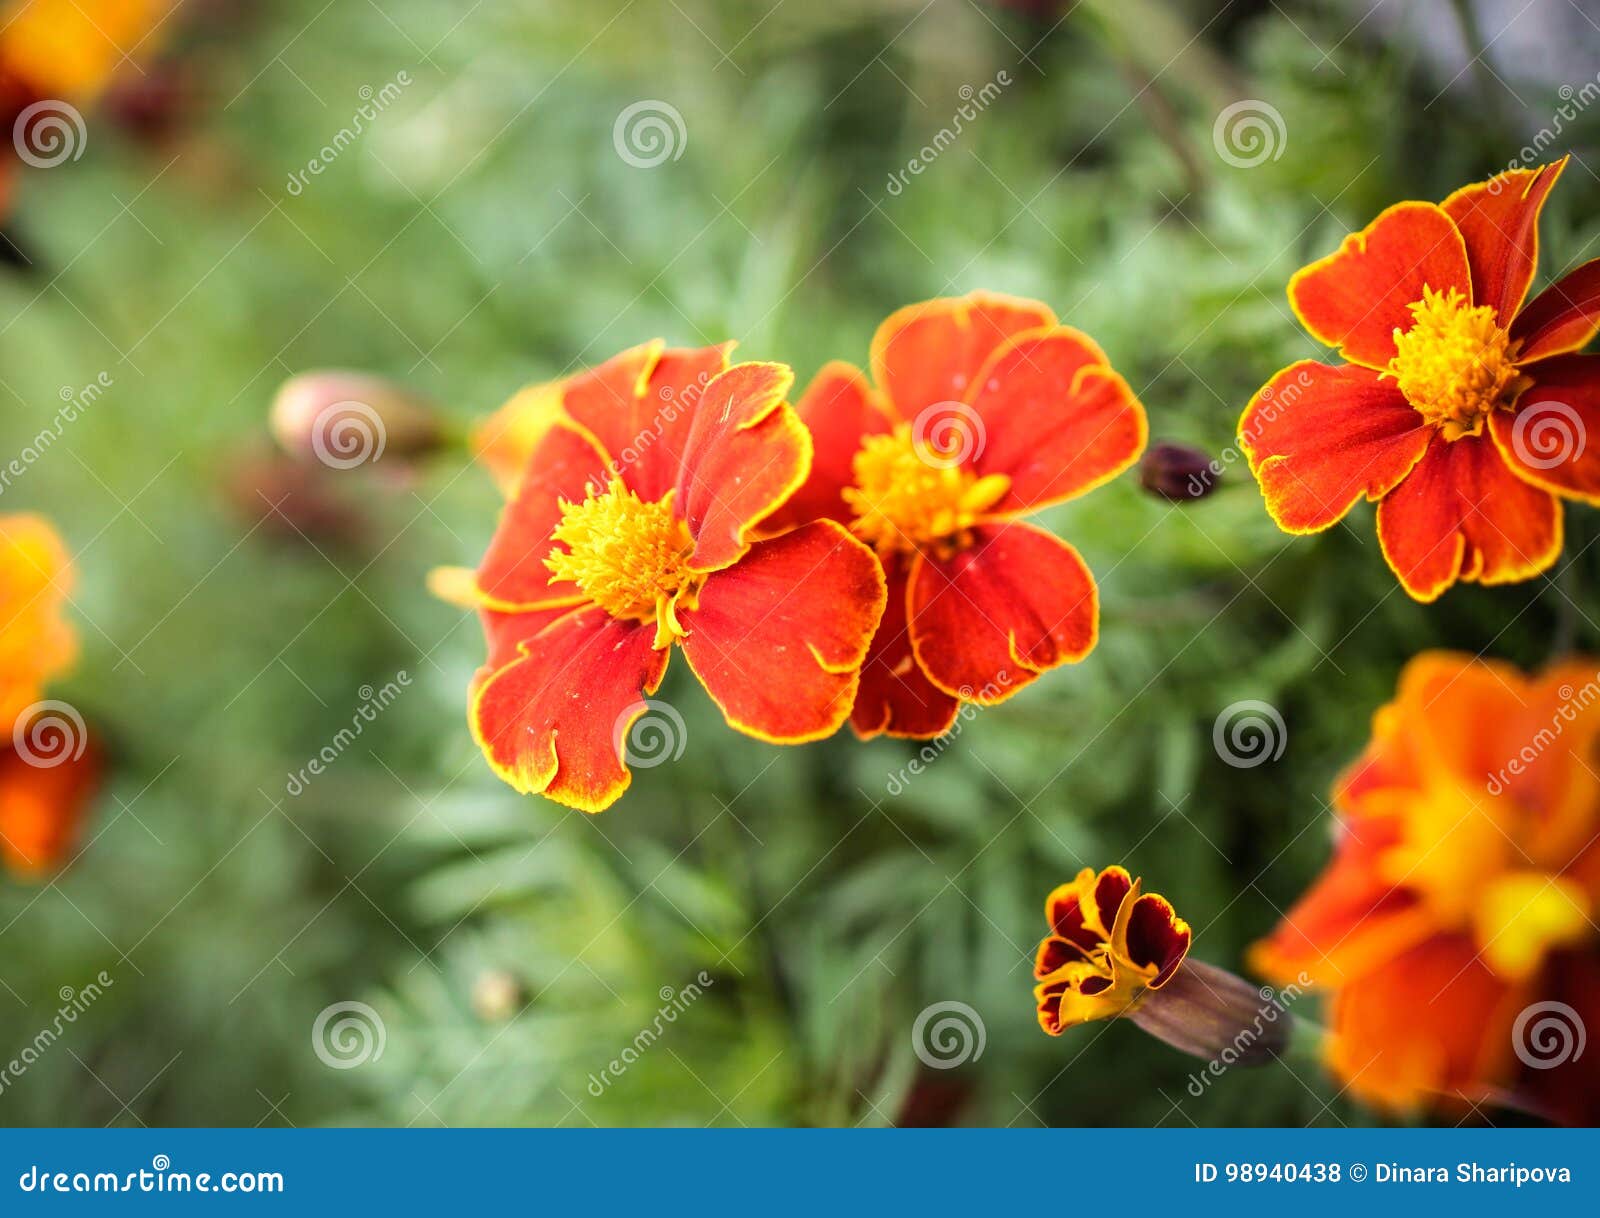 Perennial plant, marigolds stock photo. Image of gardening - 98940438